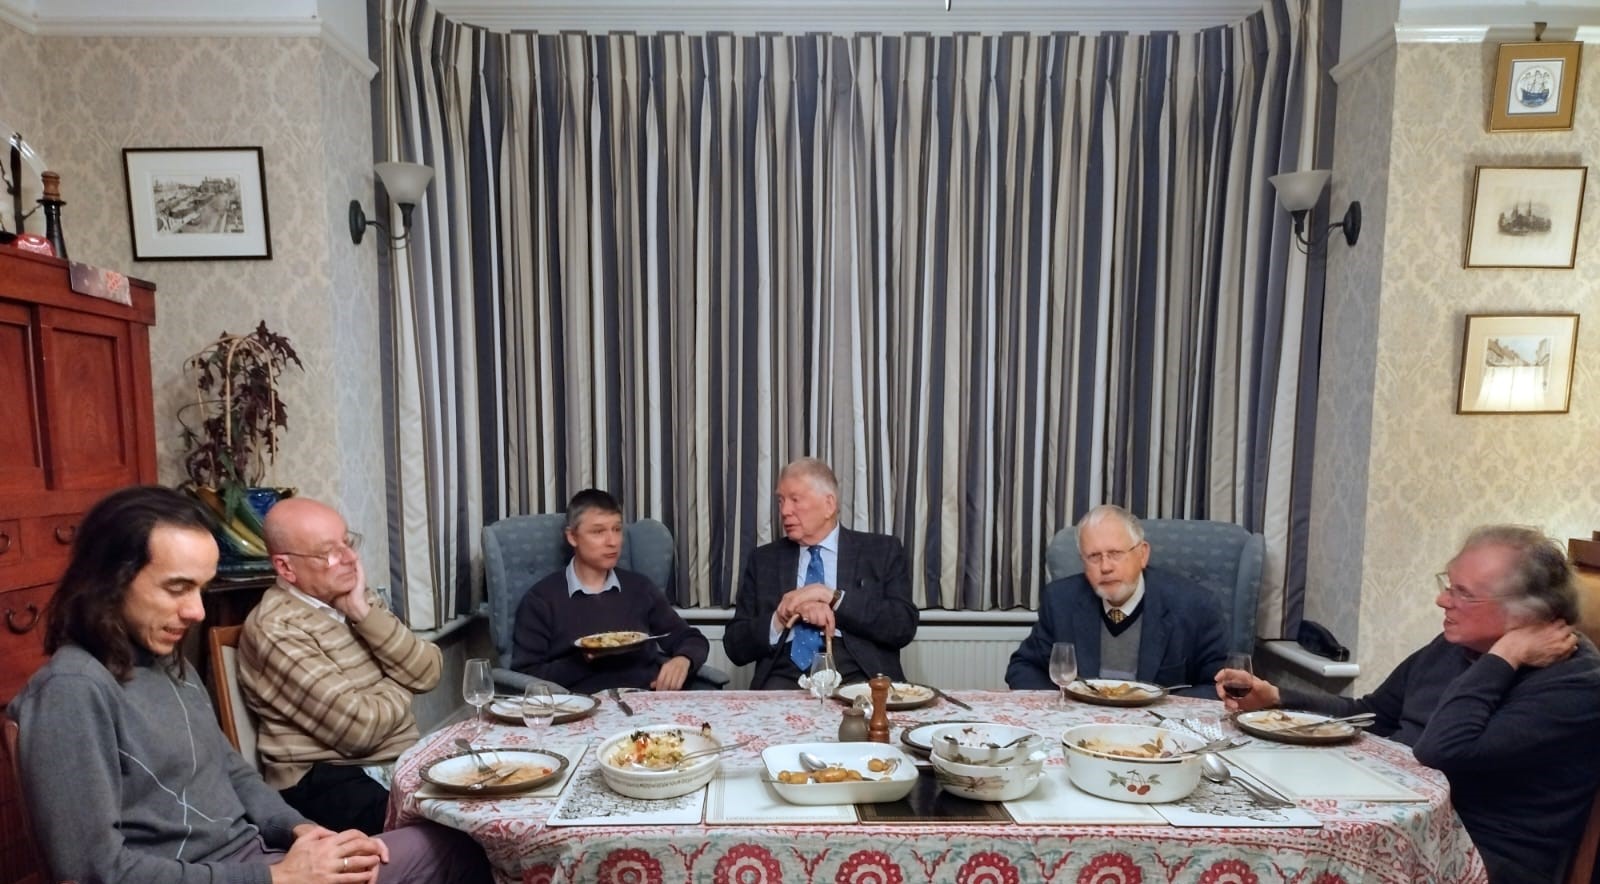 Image: EDOA members in the dining room